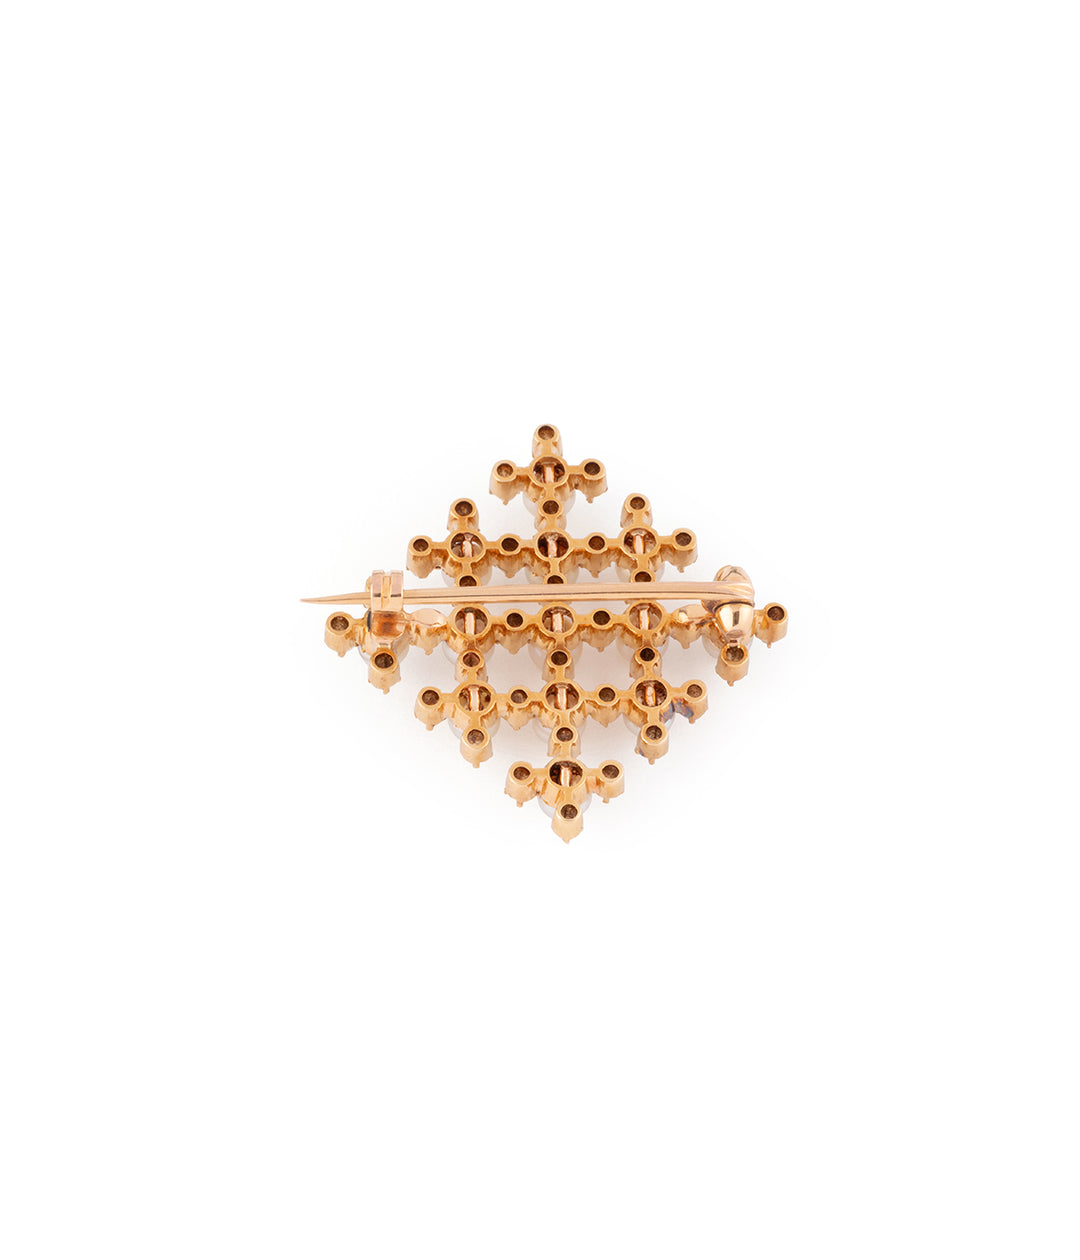 Antique diamond pearl brooch "Haro" - Caillou Paris